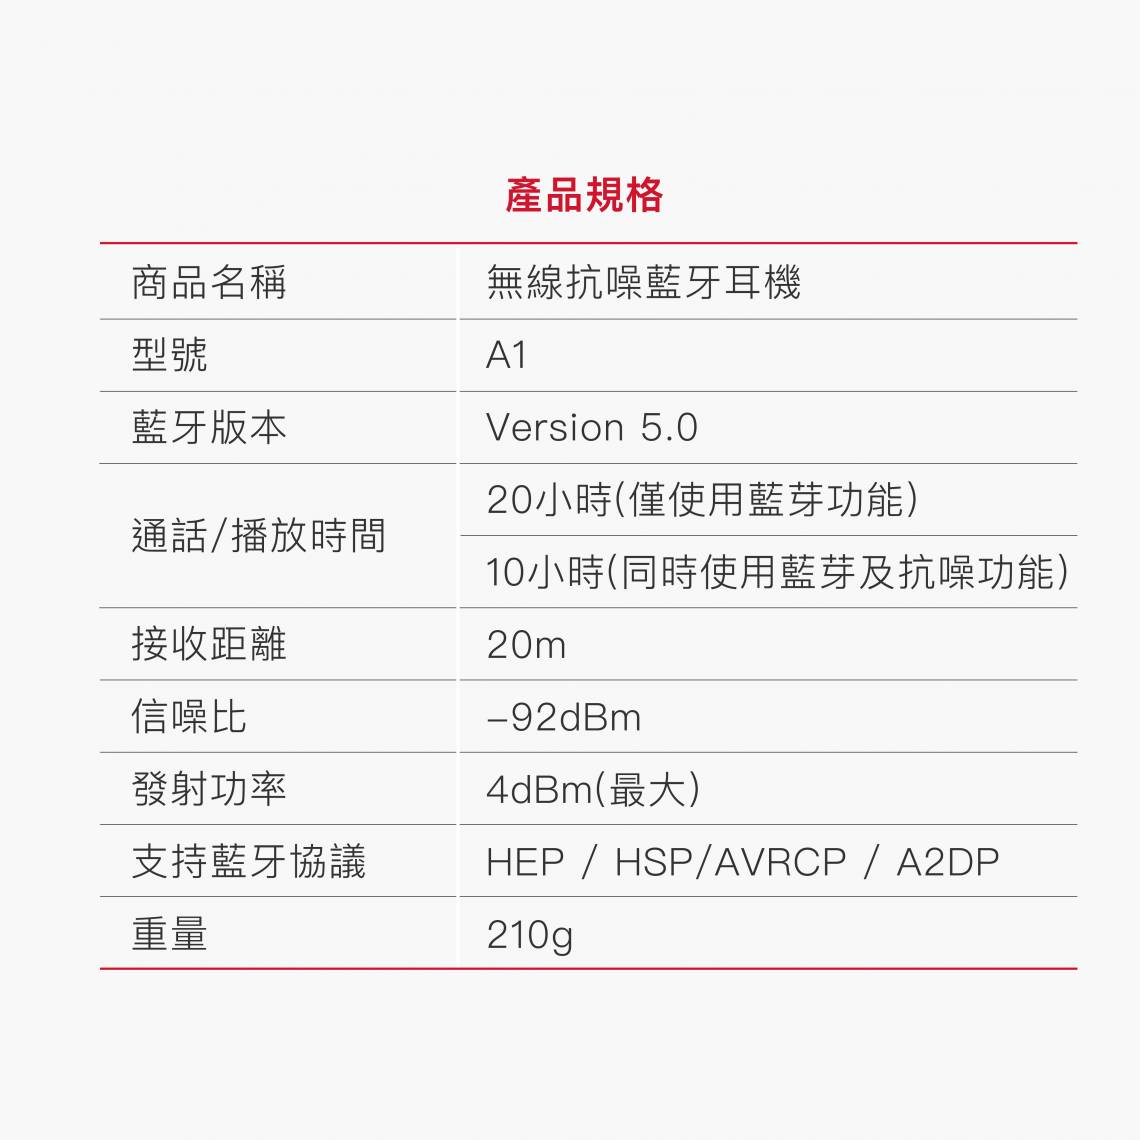 New_A1_網宣_CN_20201029-10.jpg